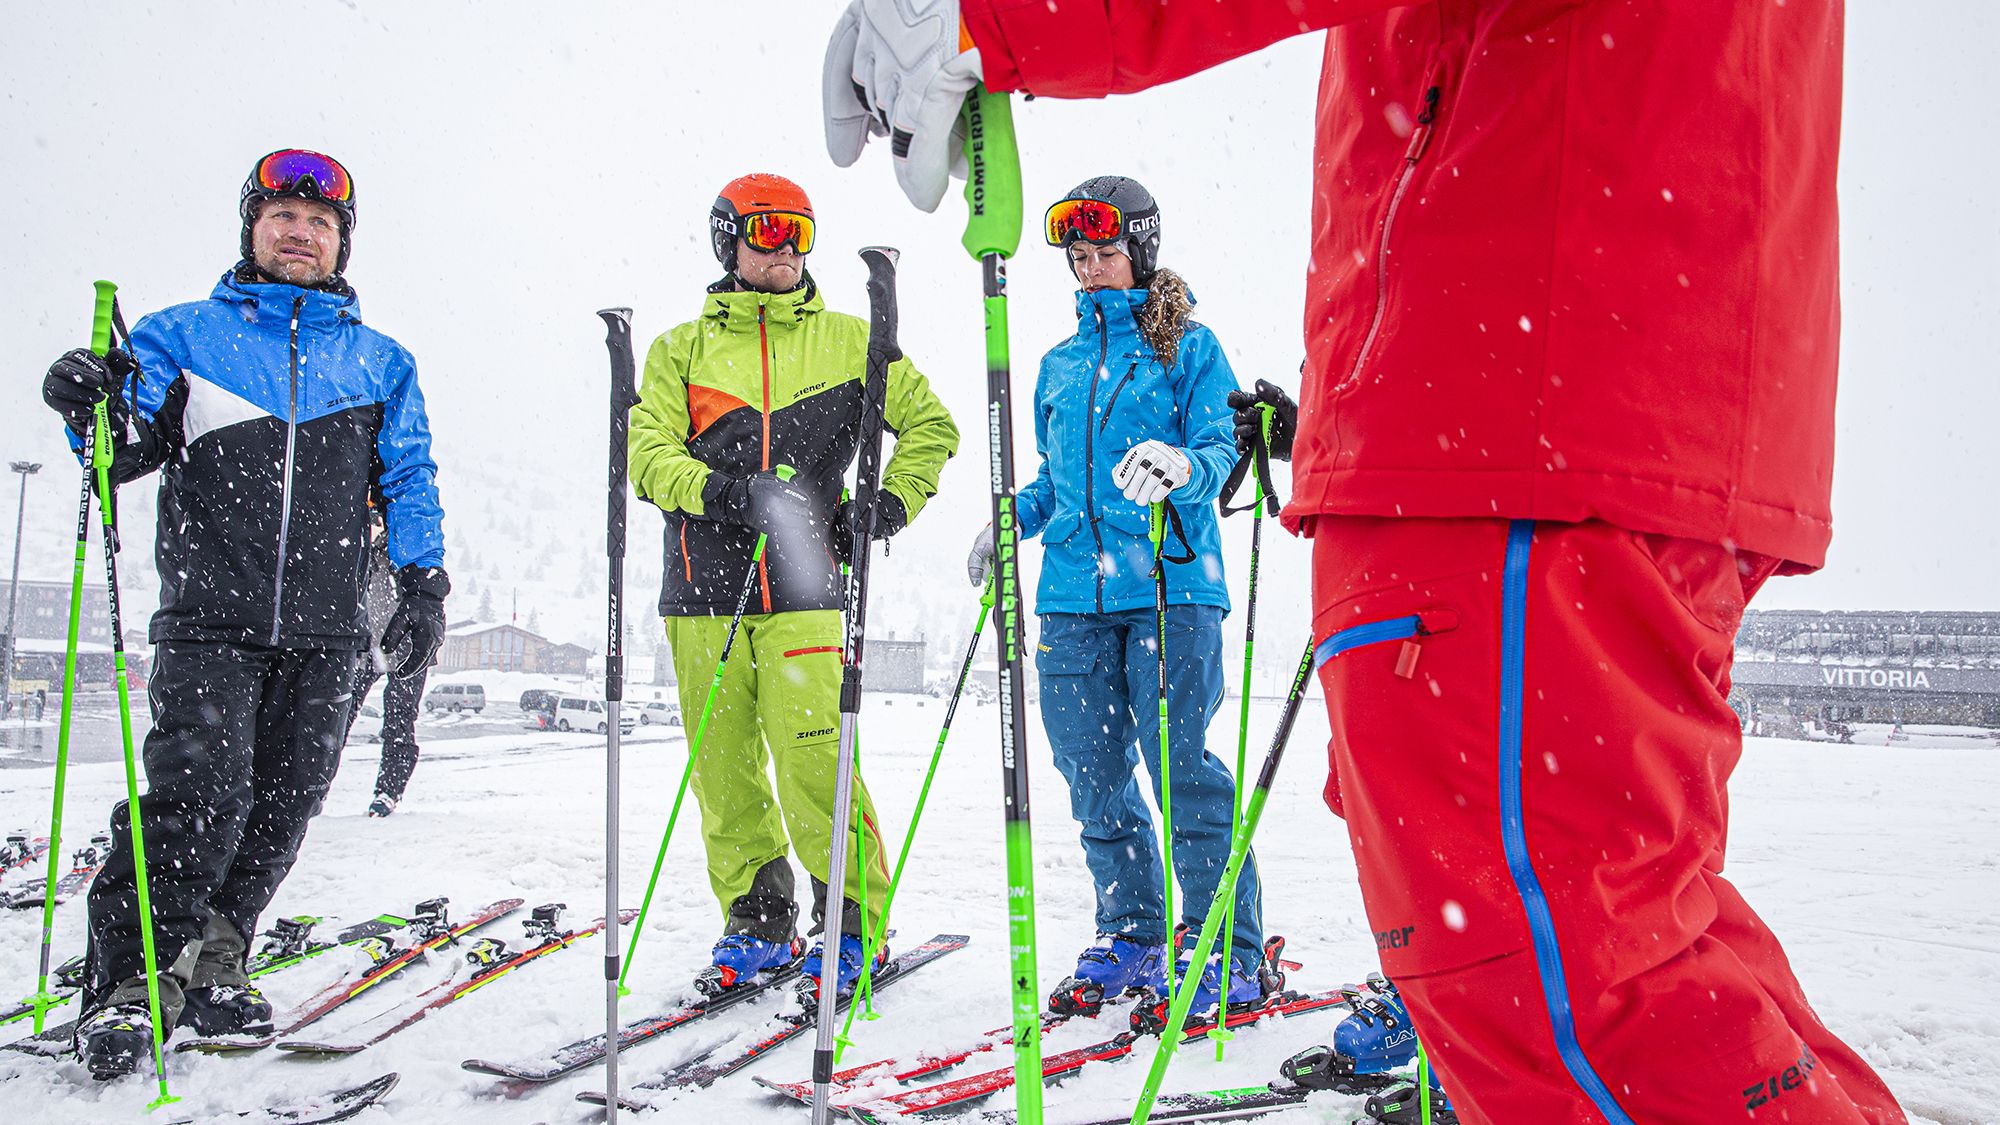 Vernauwd Grondig roddel Uitslag skitest 2019-2020: allmountain - Wintersport weblog